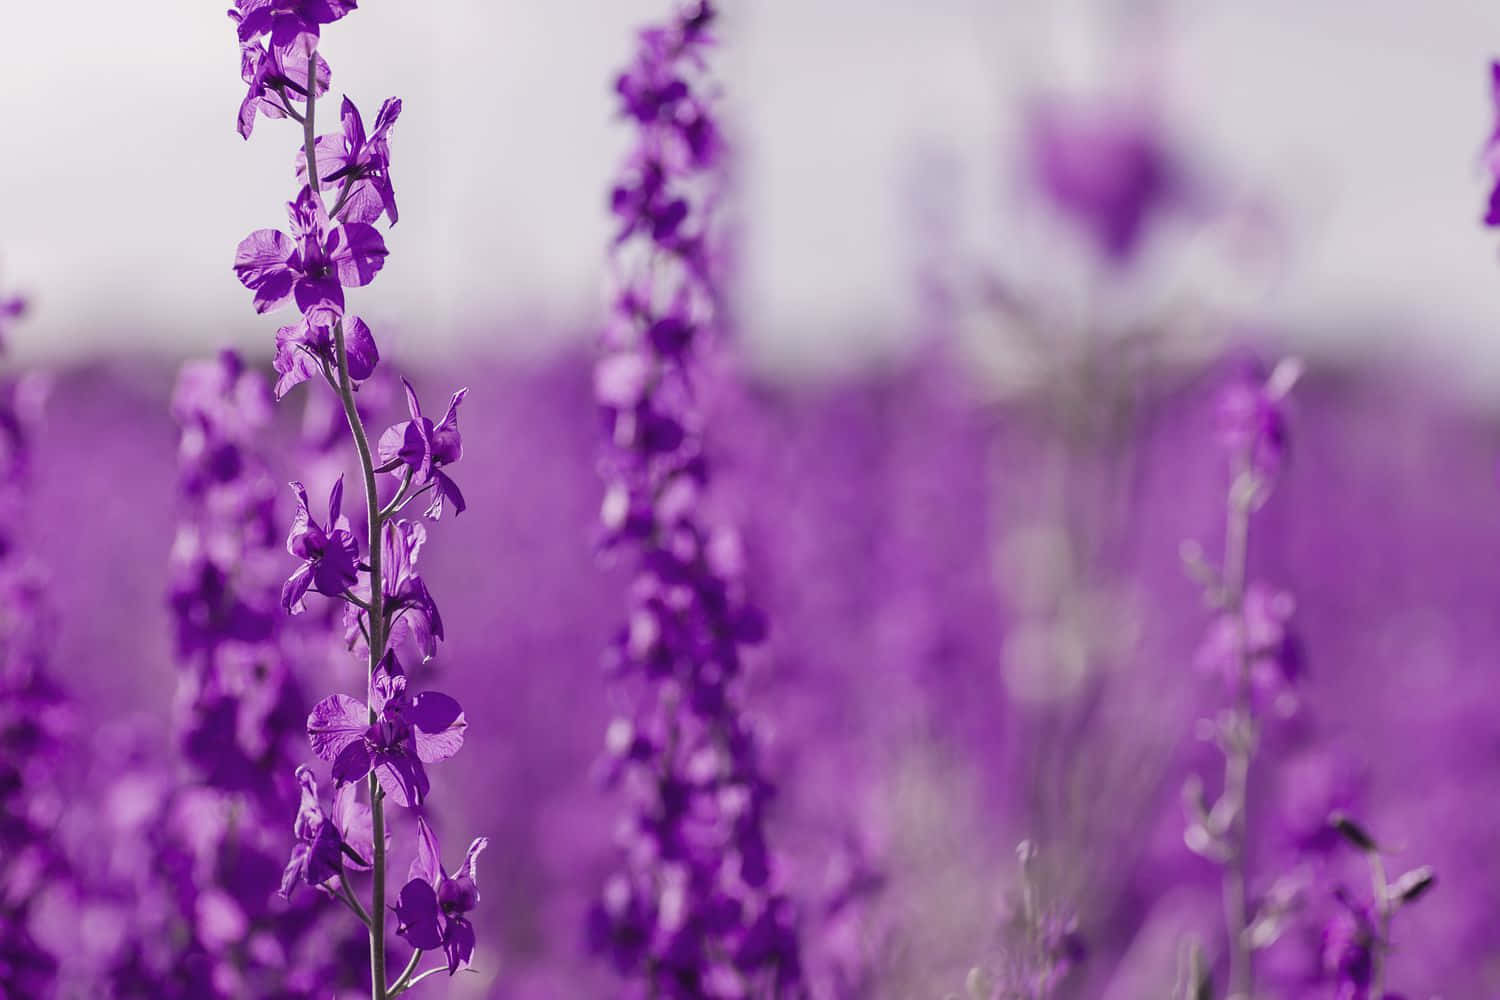 Blurred Lavender Purple Flowers Background